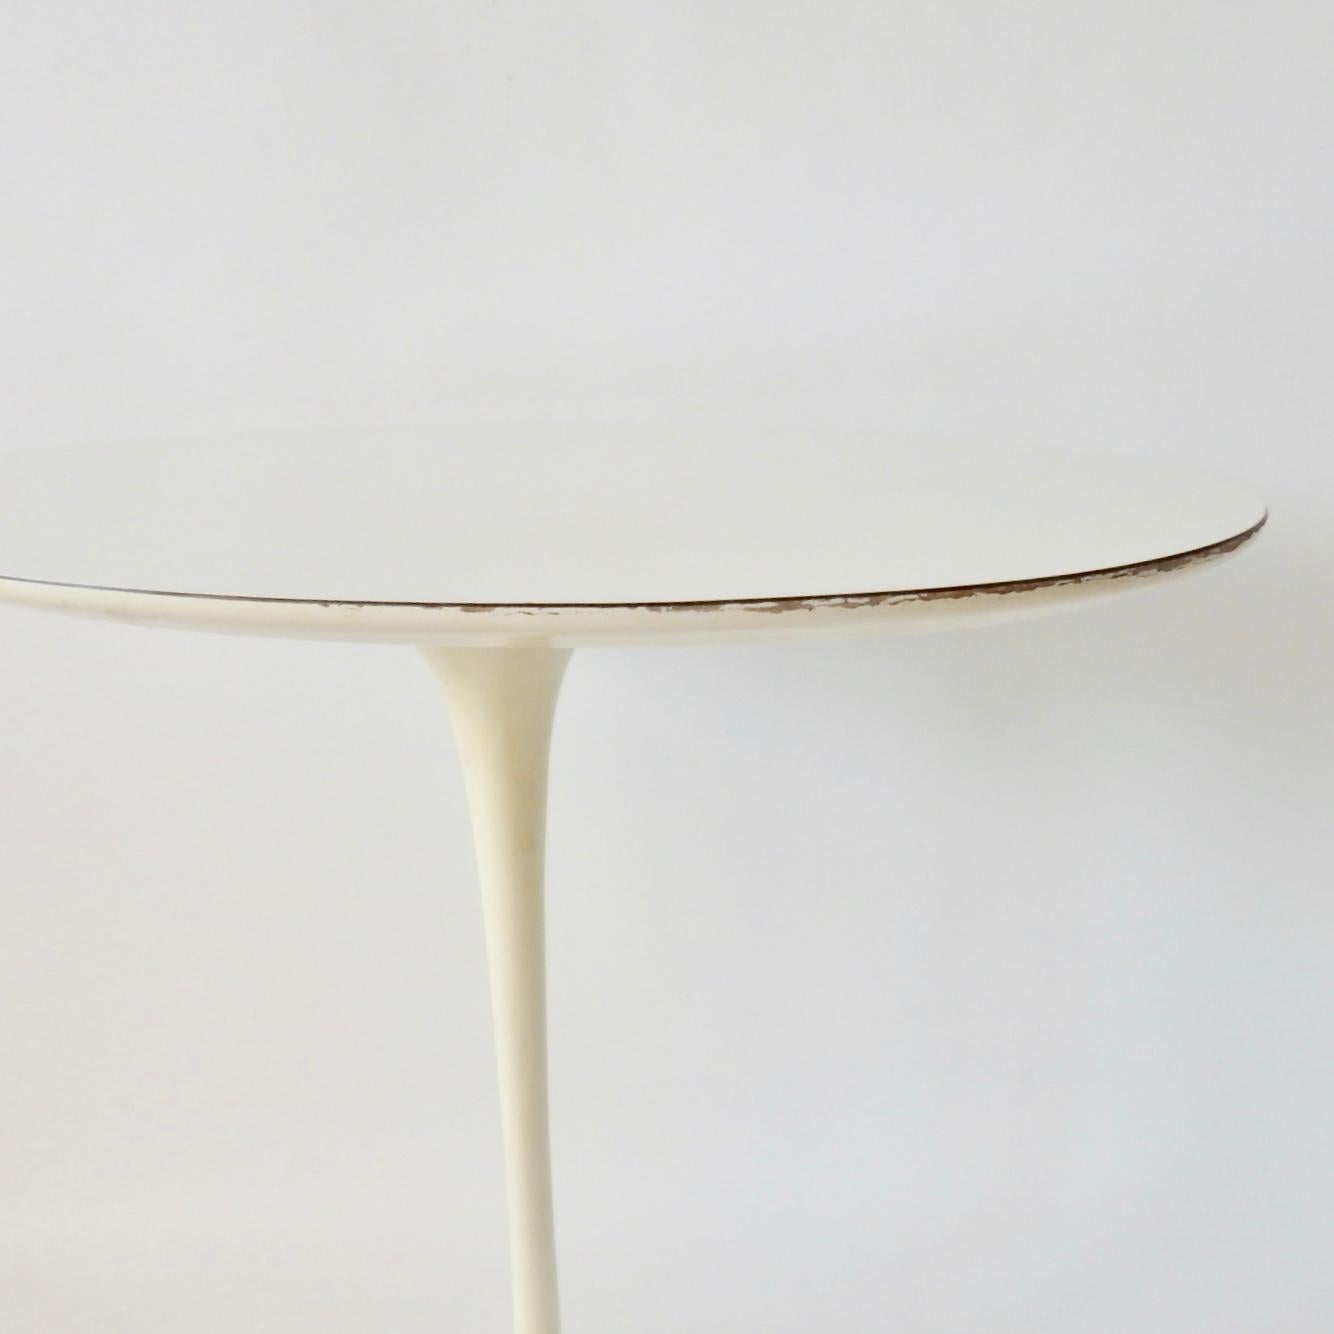 American  Eero Saarinen Tulip side table for Knoll